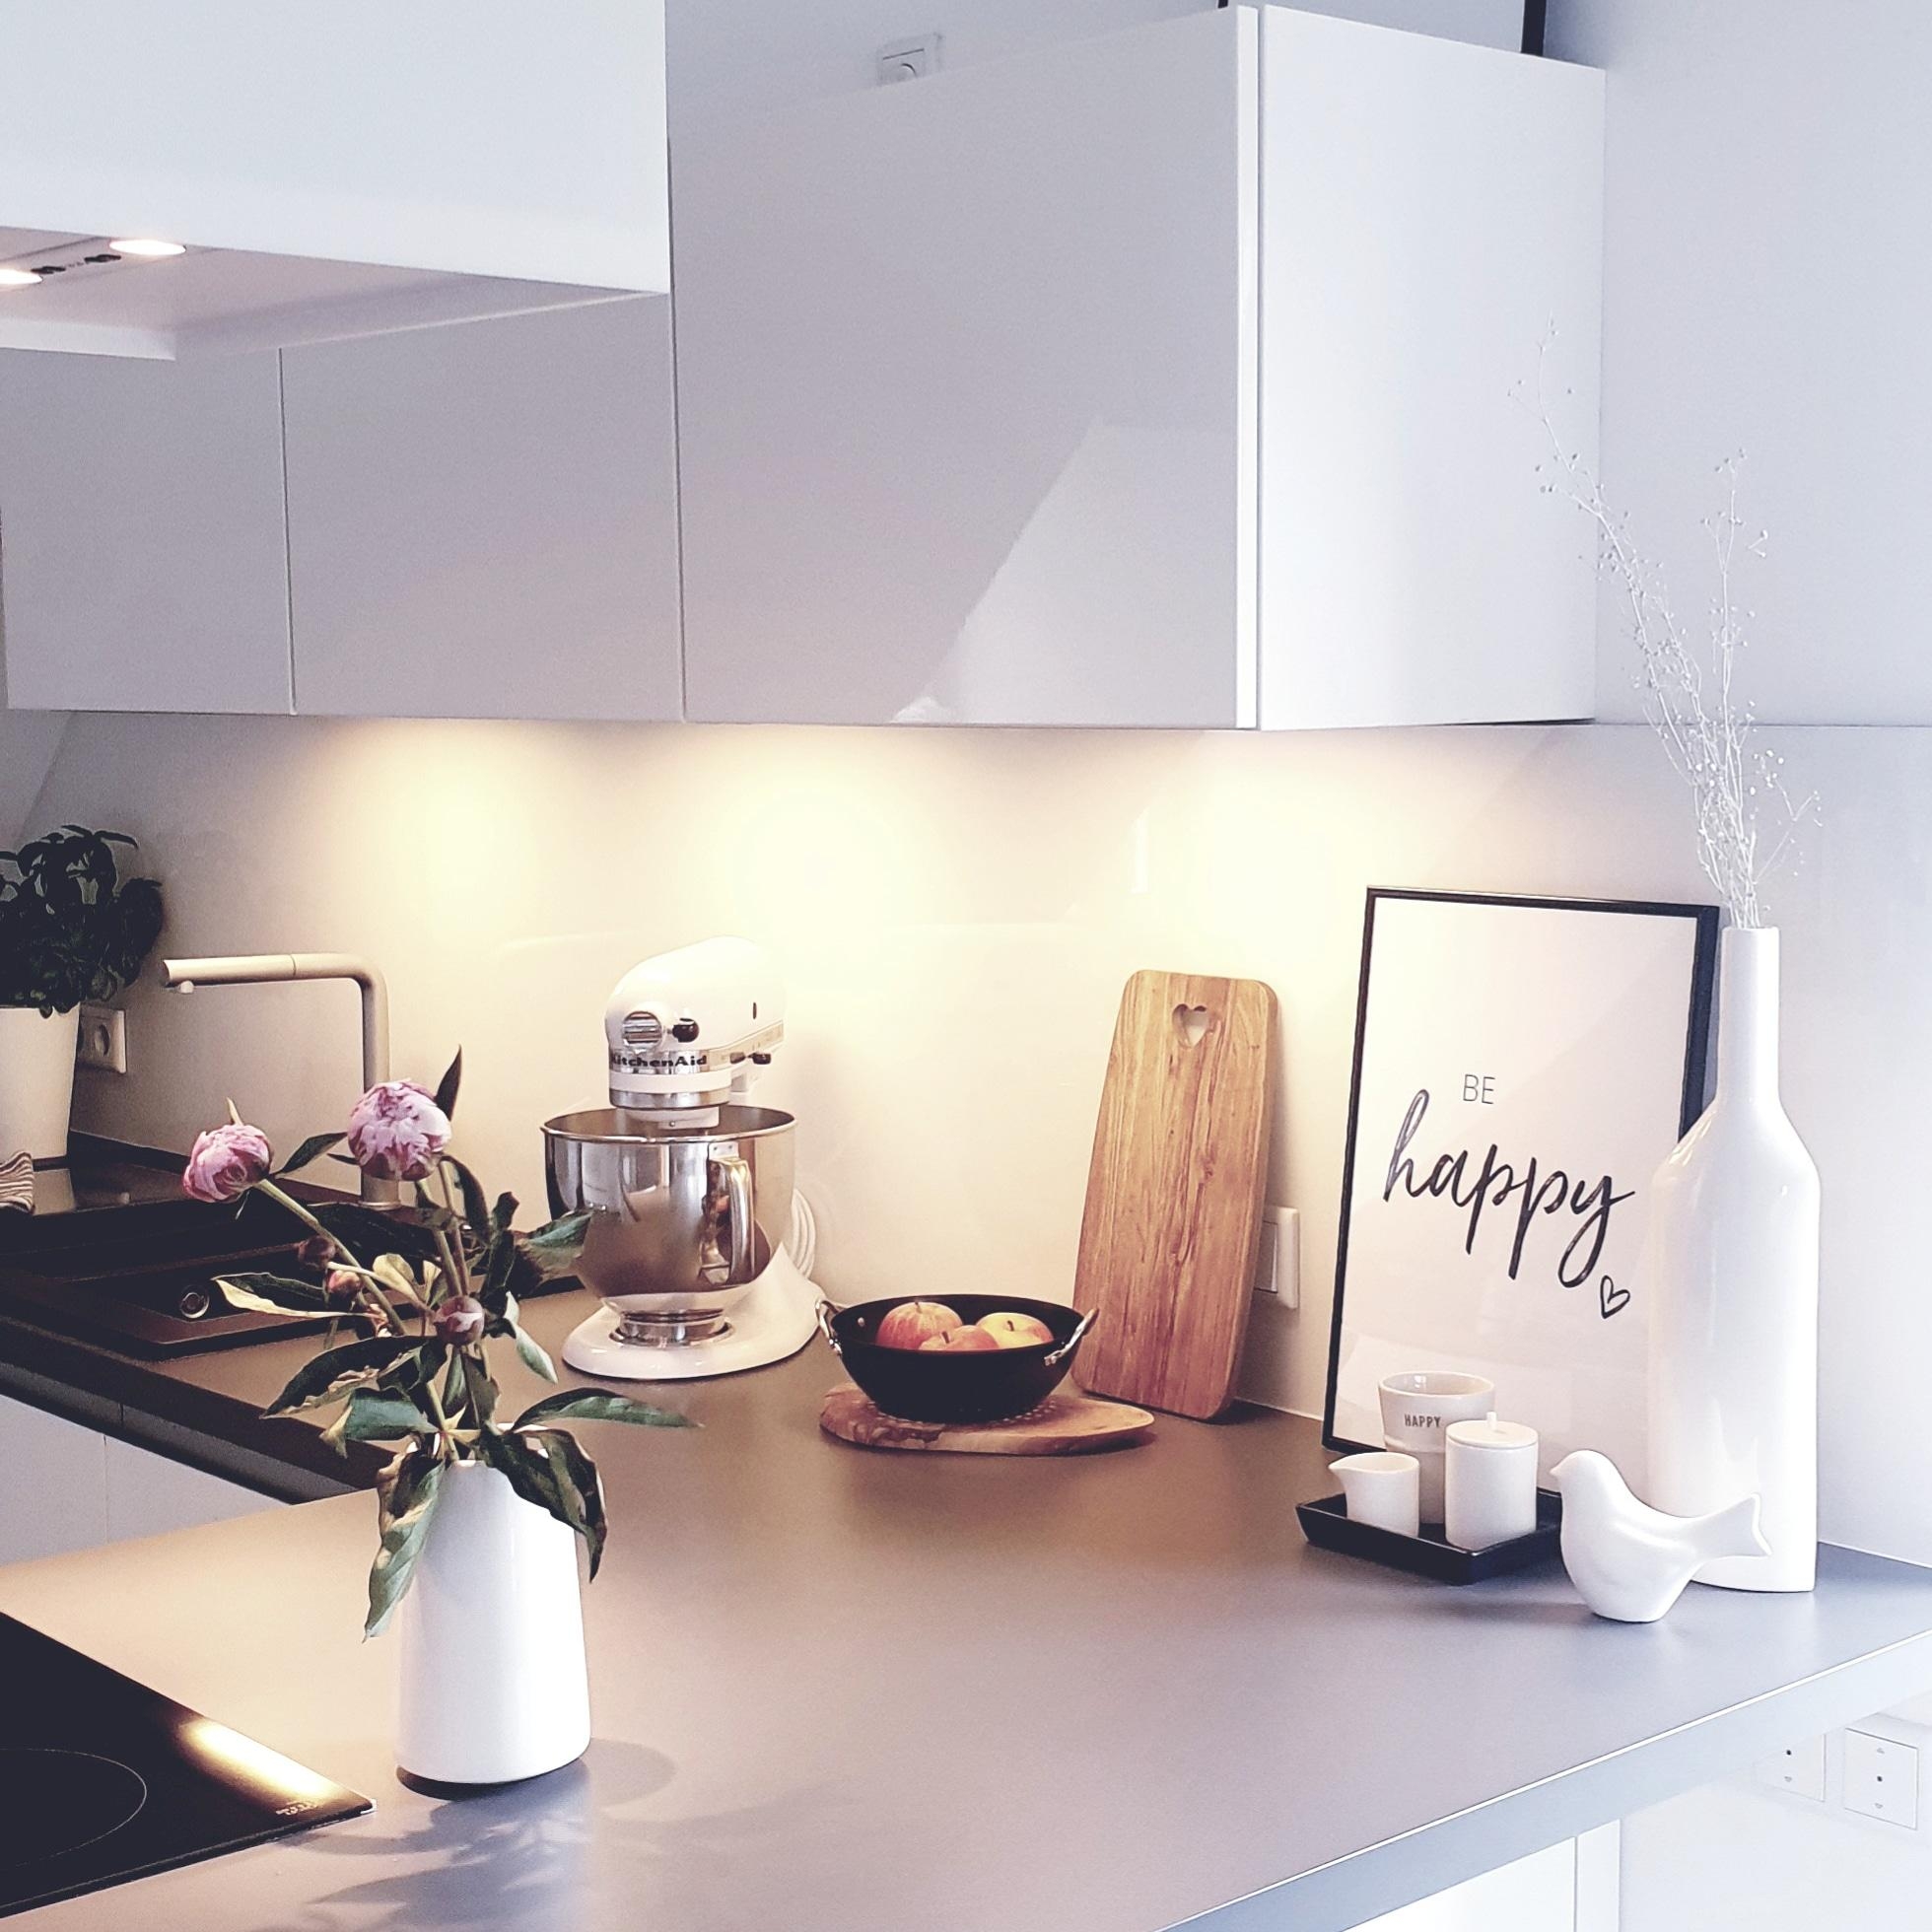 Unsere Küche 😍
#kitcheninspo #interior